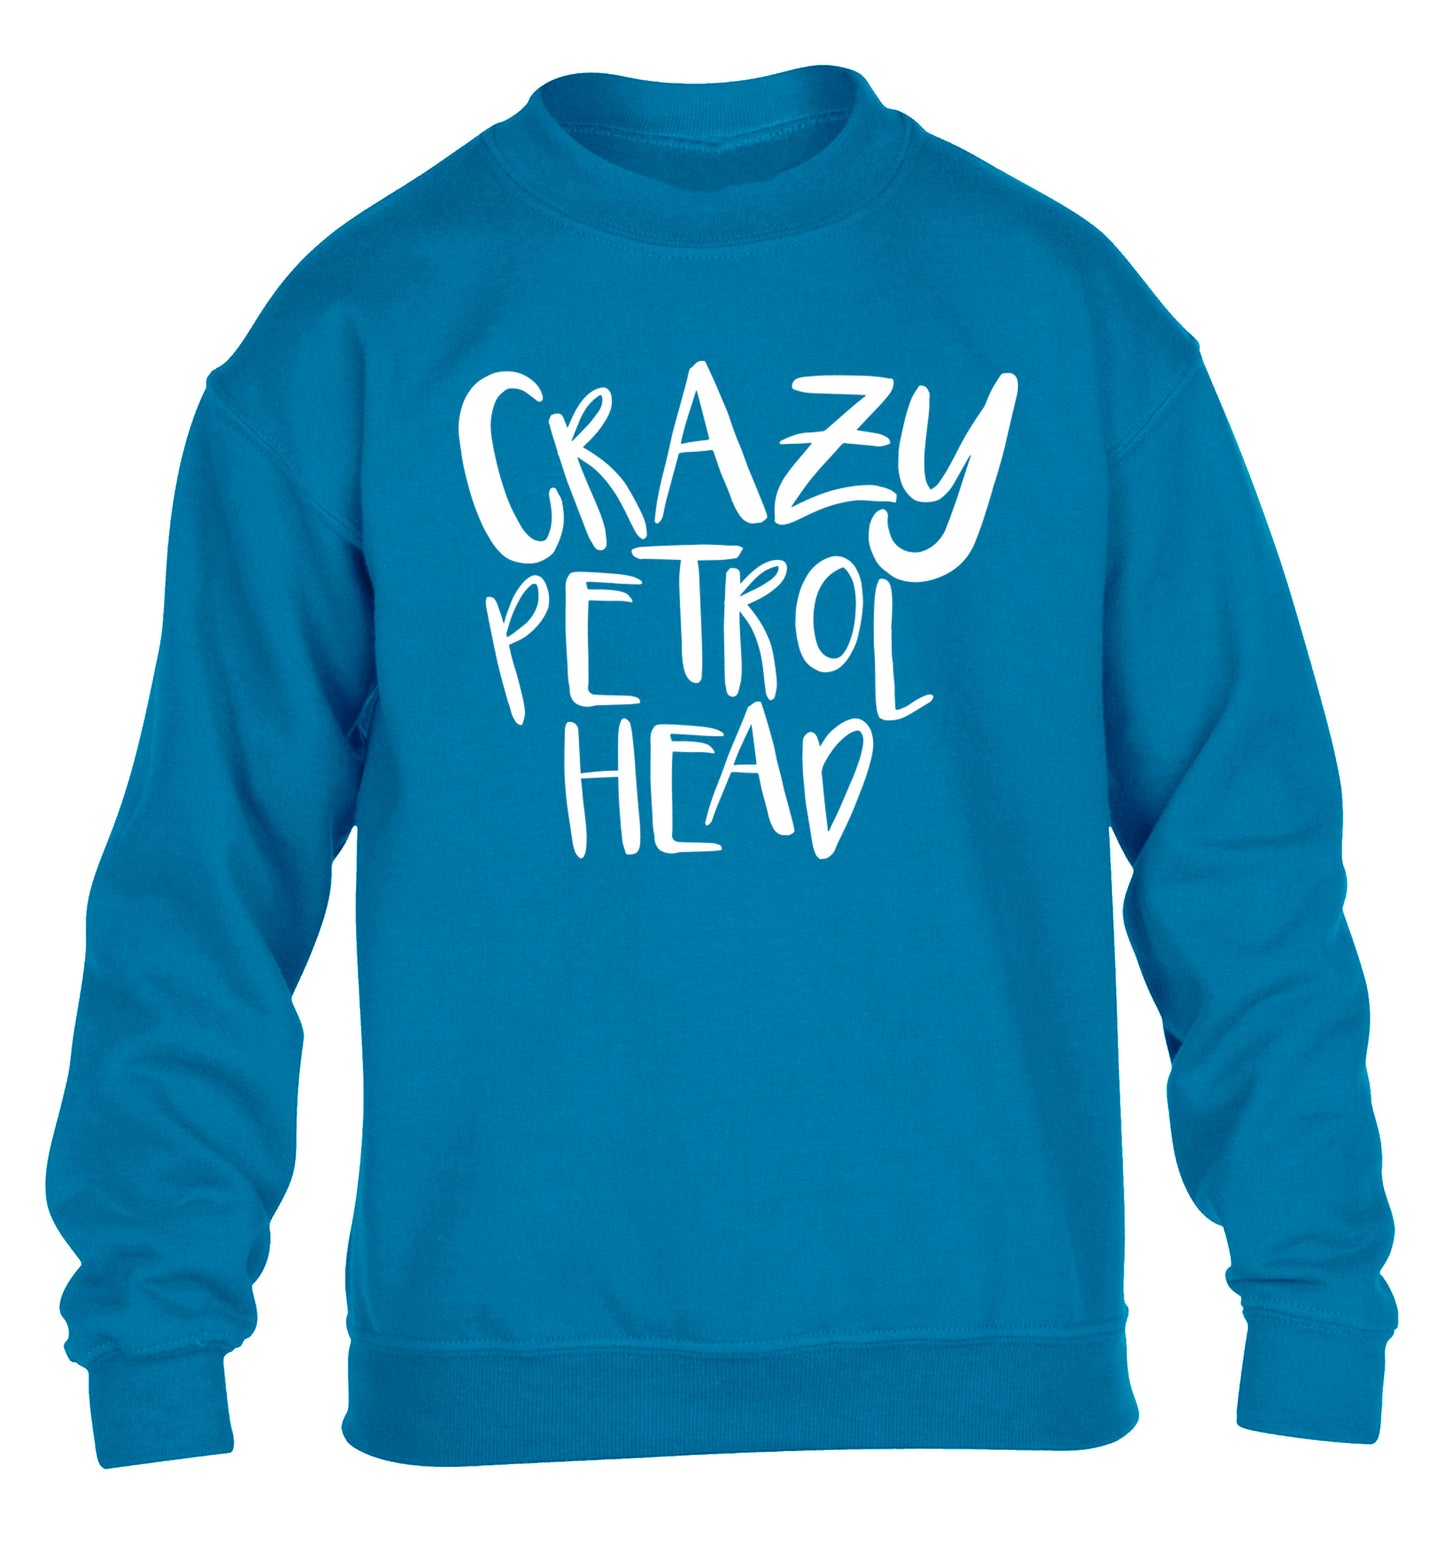 Crazy petrol head children's blue sweater 12-13 Years